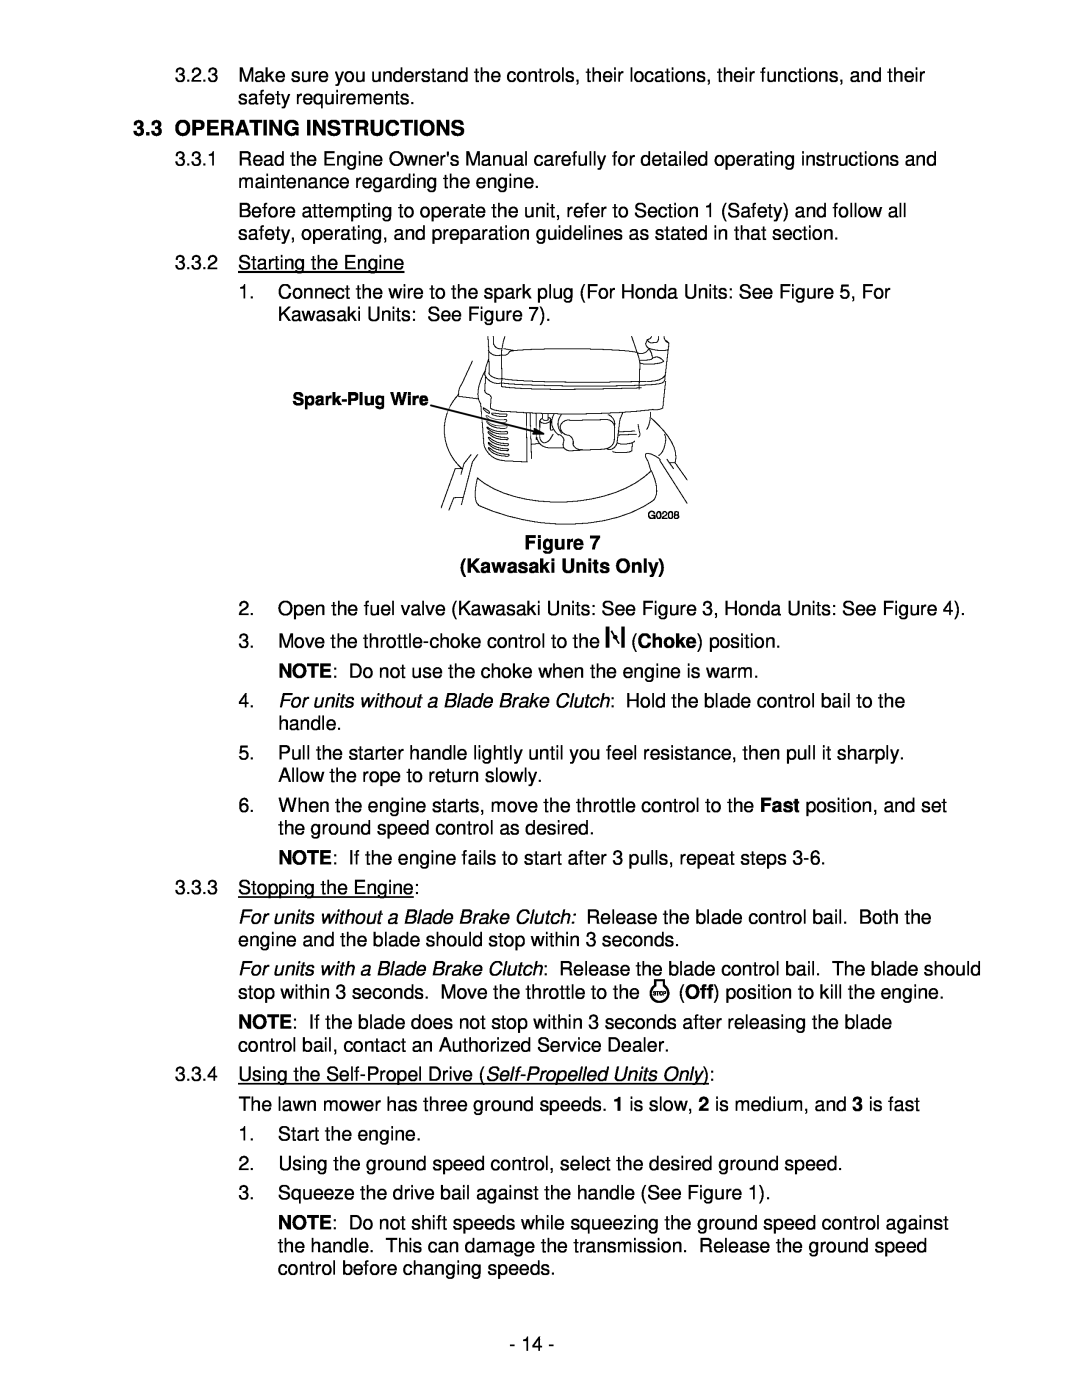 Honda Power Equipment metro 21 manual Operating Instructions, Kawasaki Units Only 